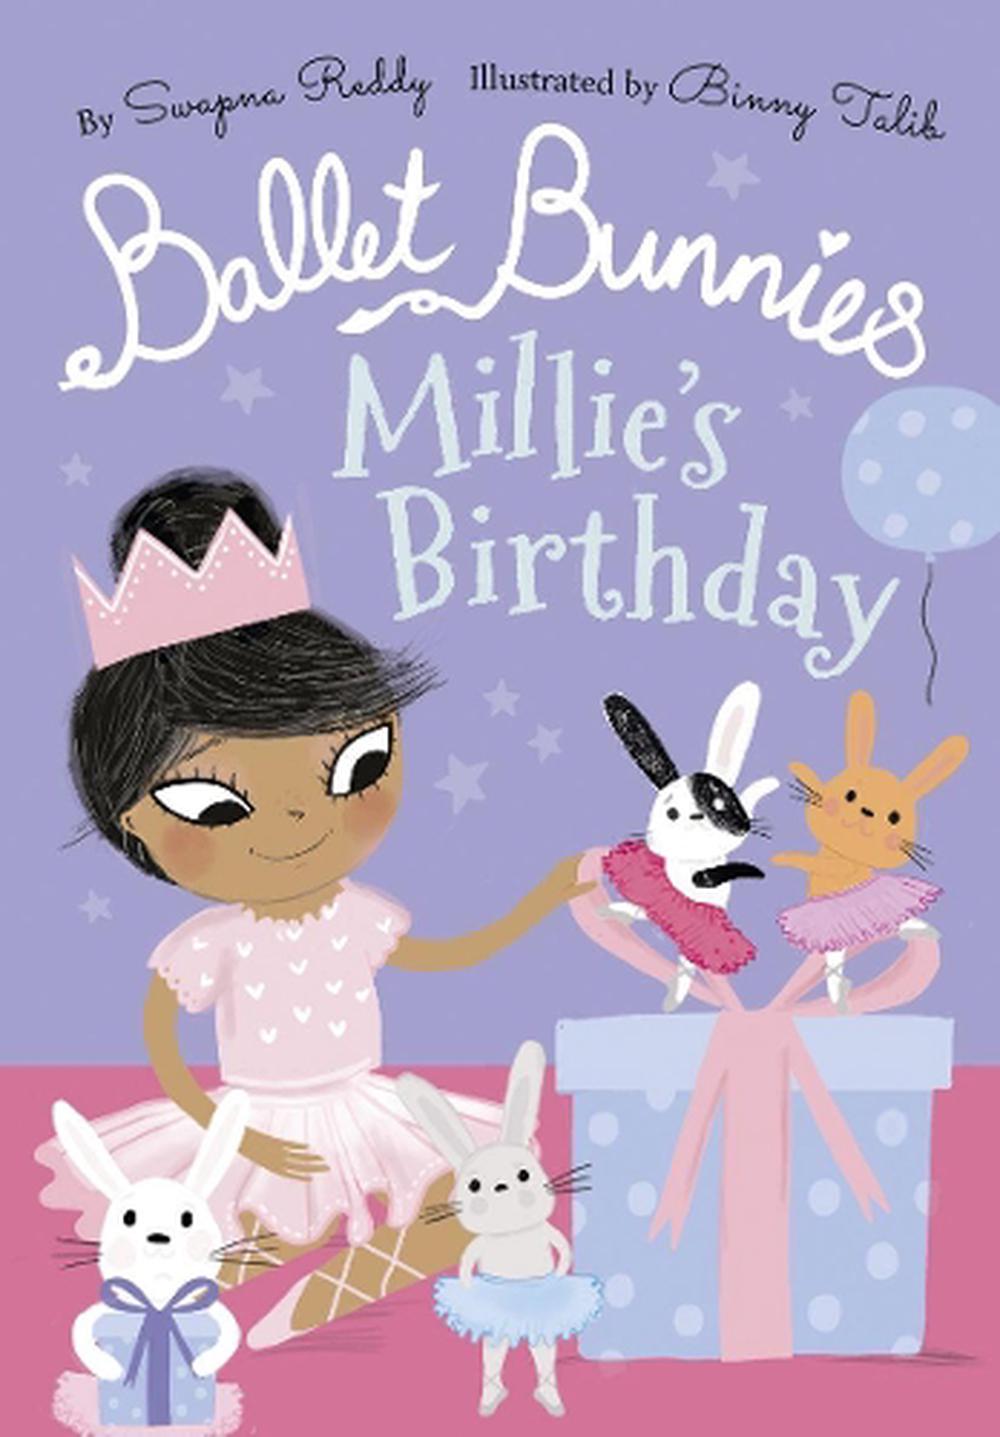 93 List Ballerina Bunny Book for Kids